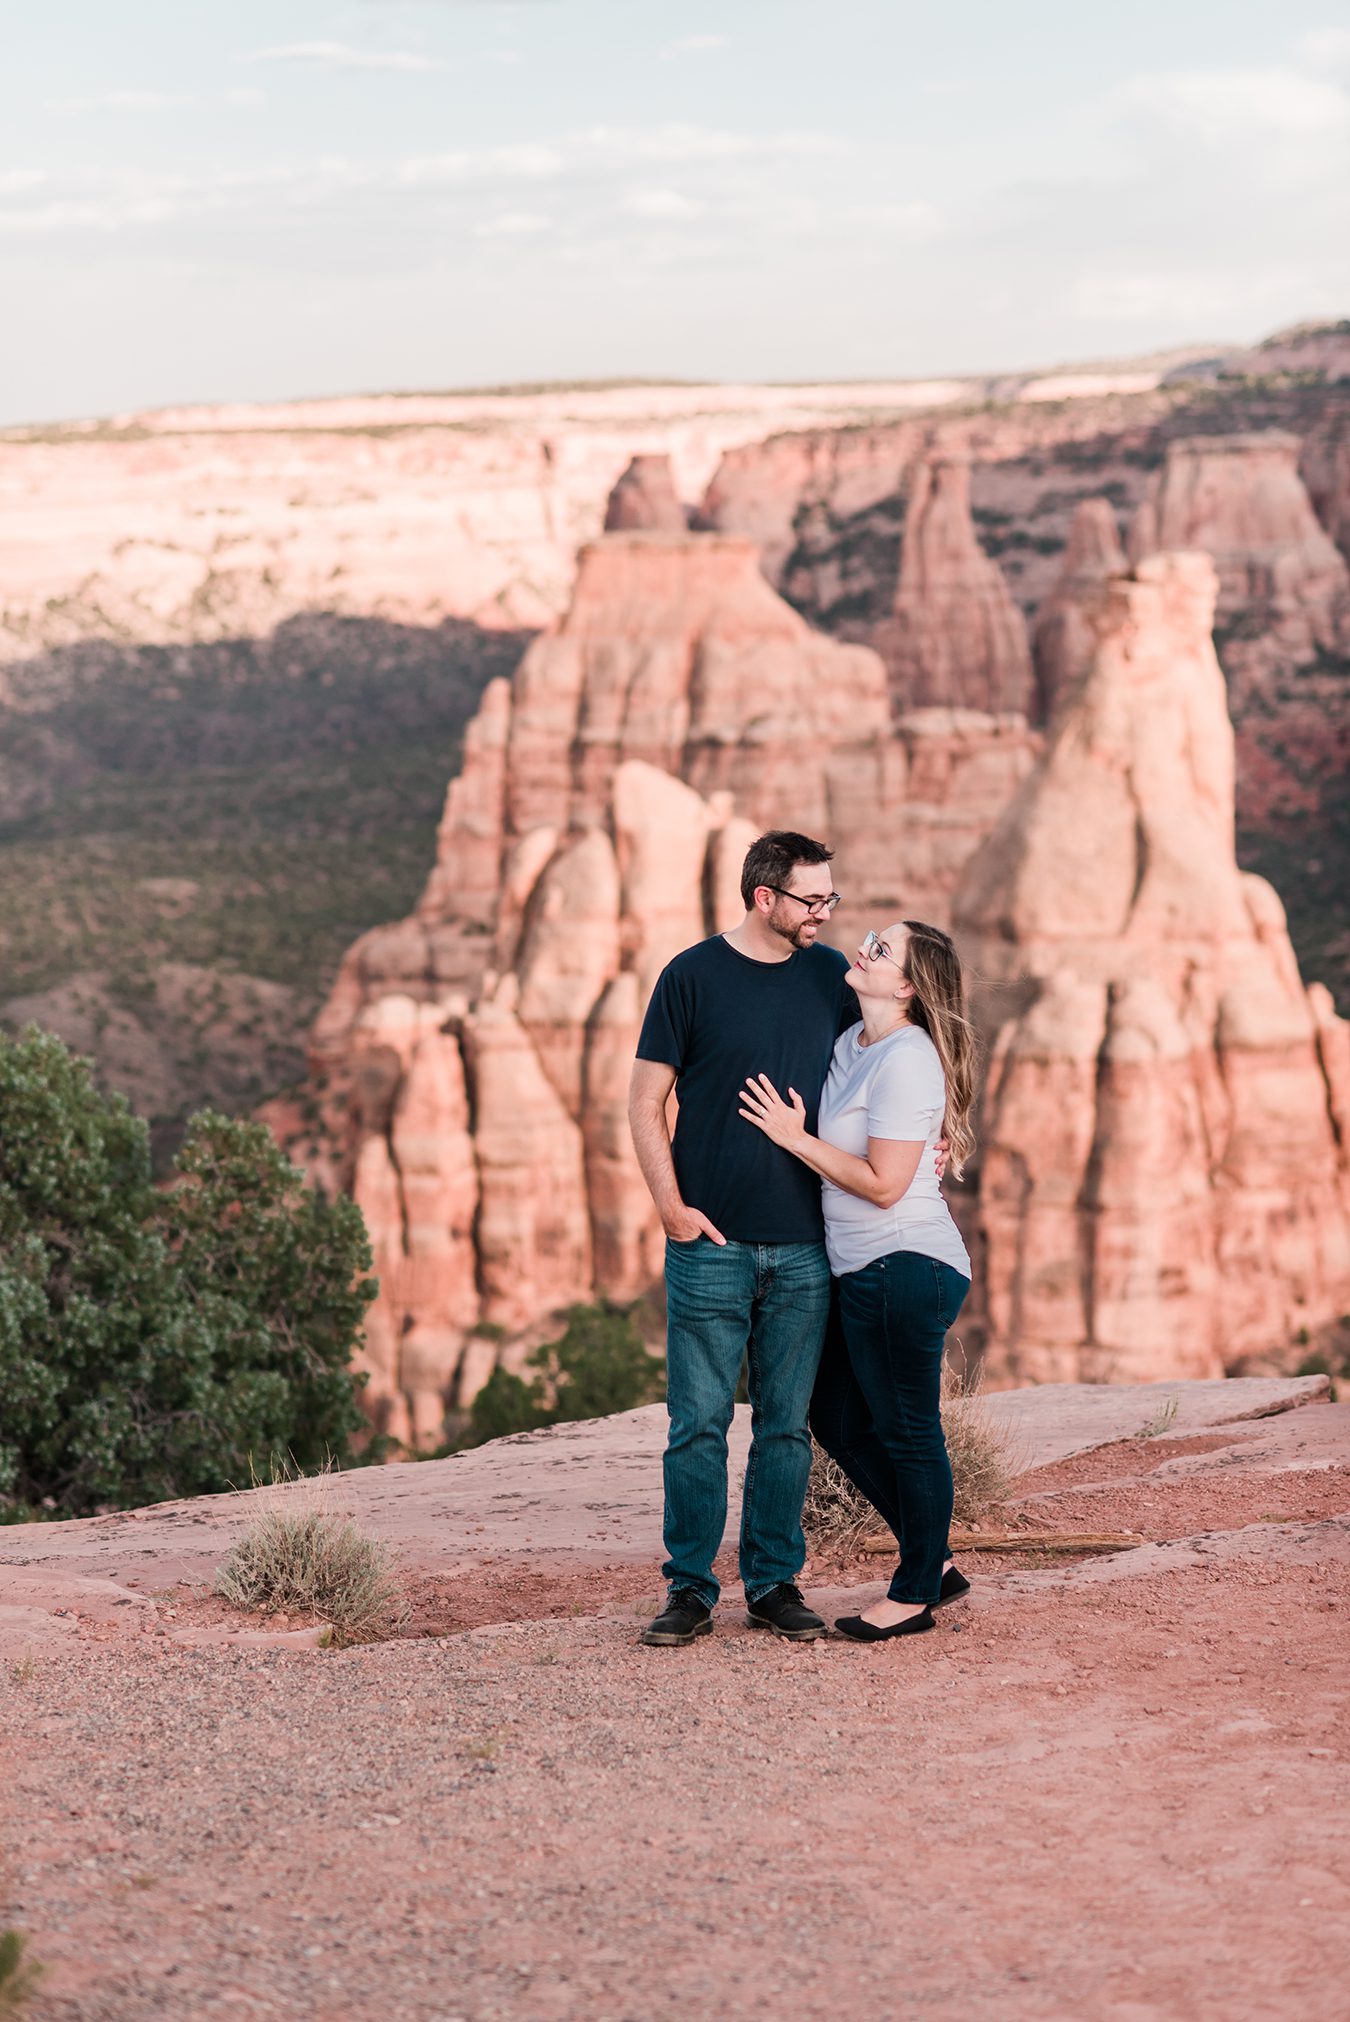 Laura & Joe | Engagement Photos on the Colorado National Monument